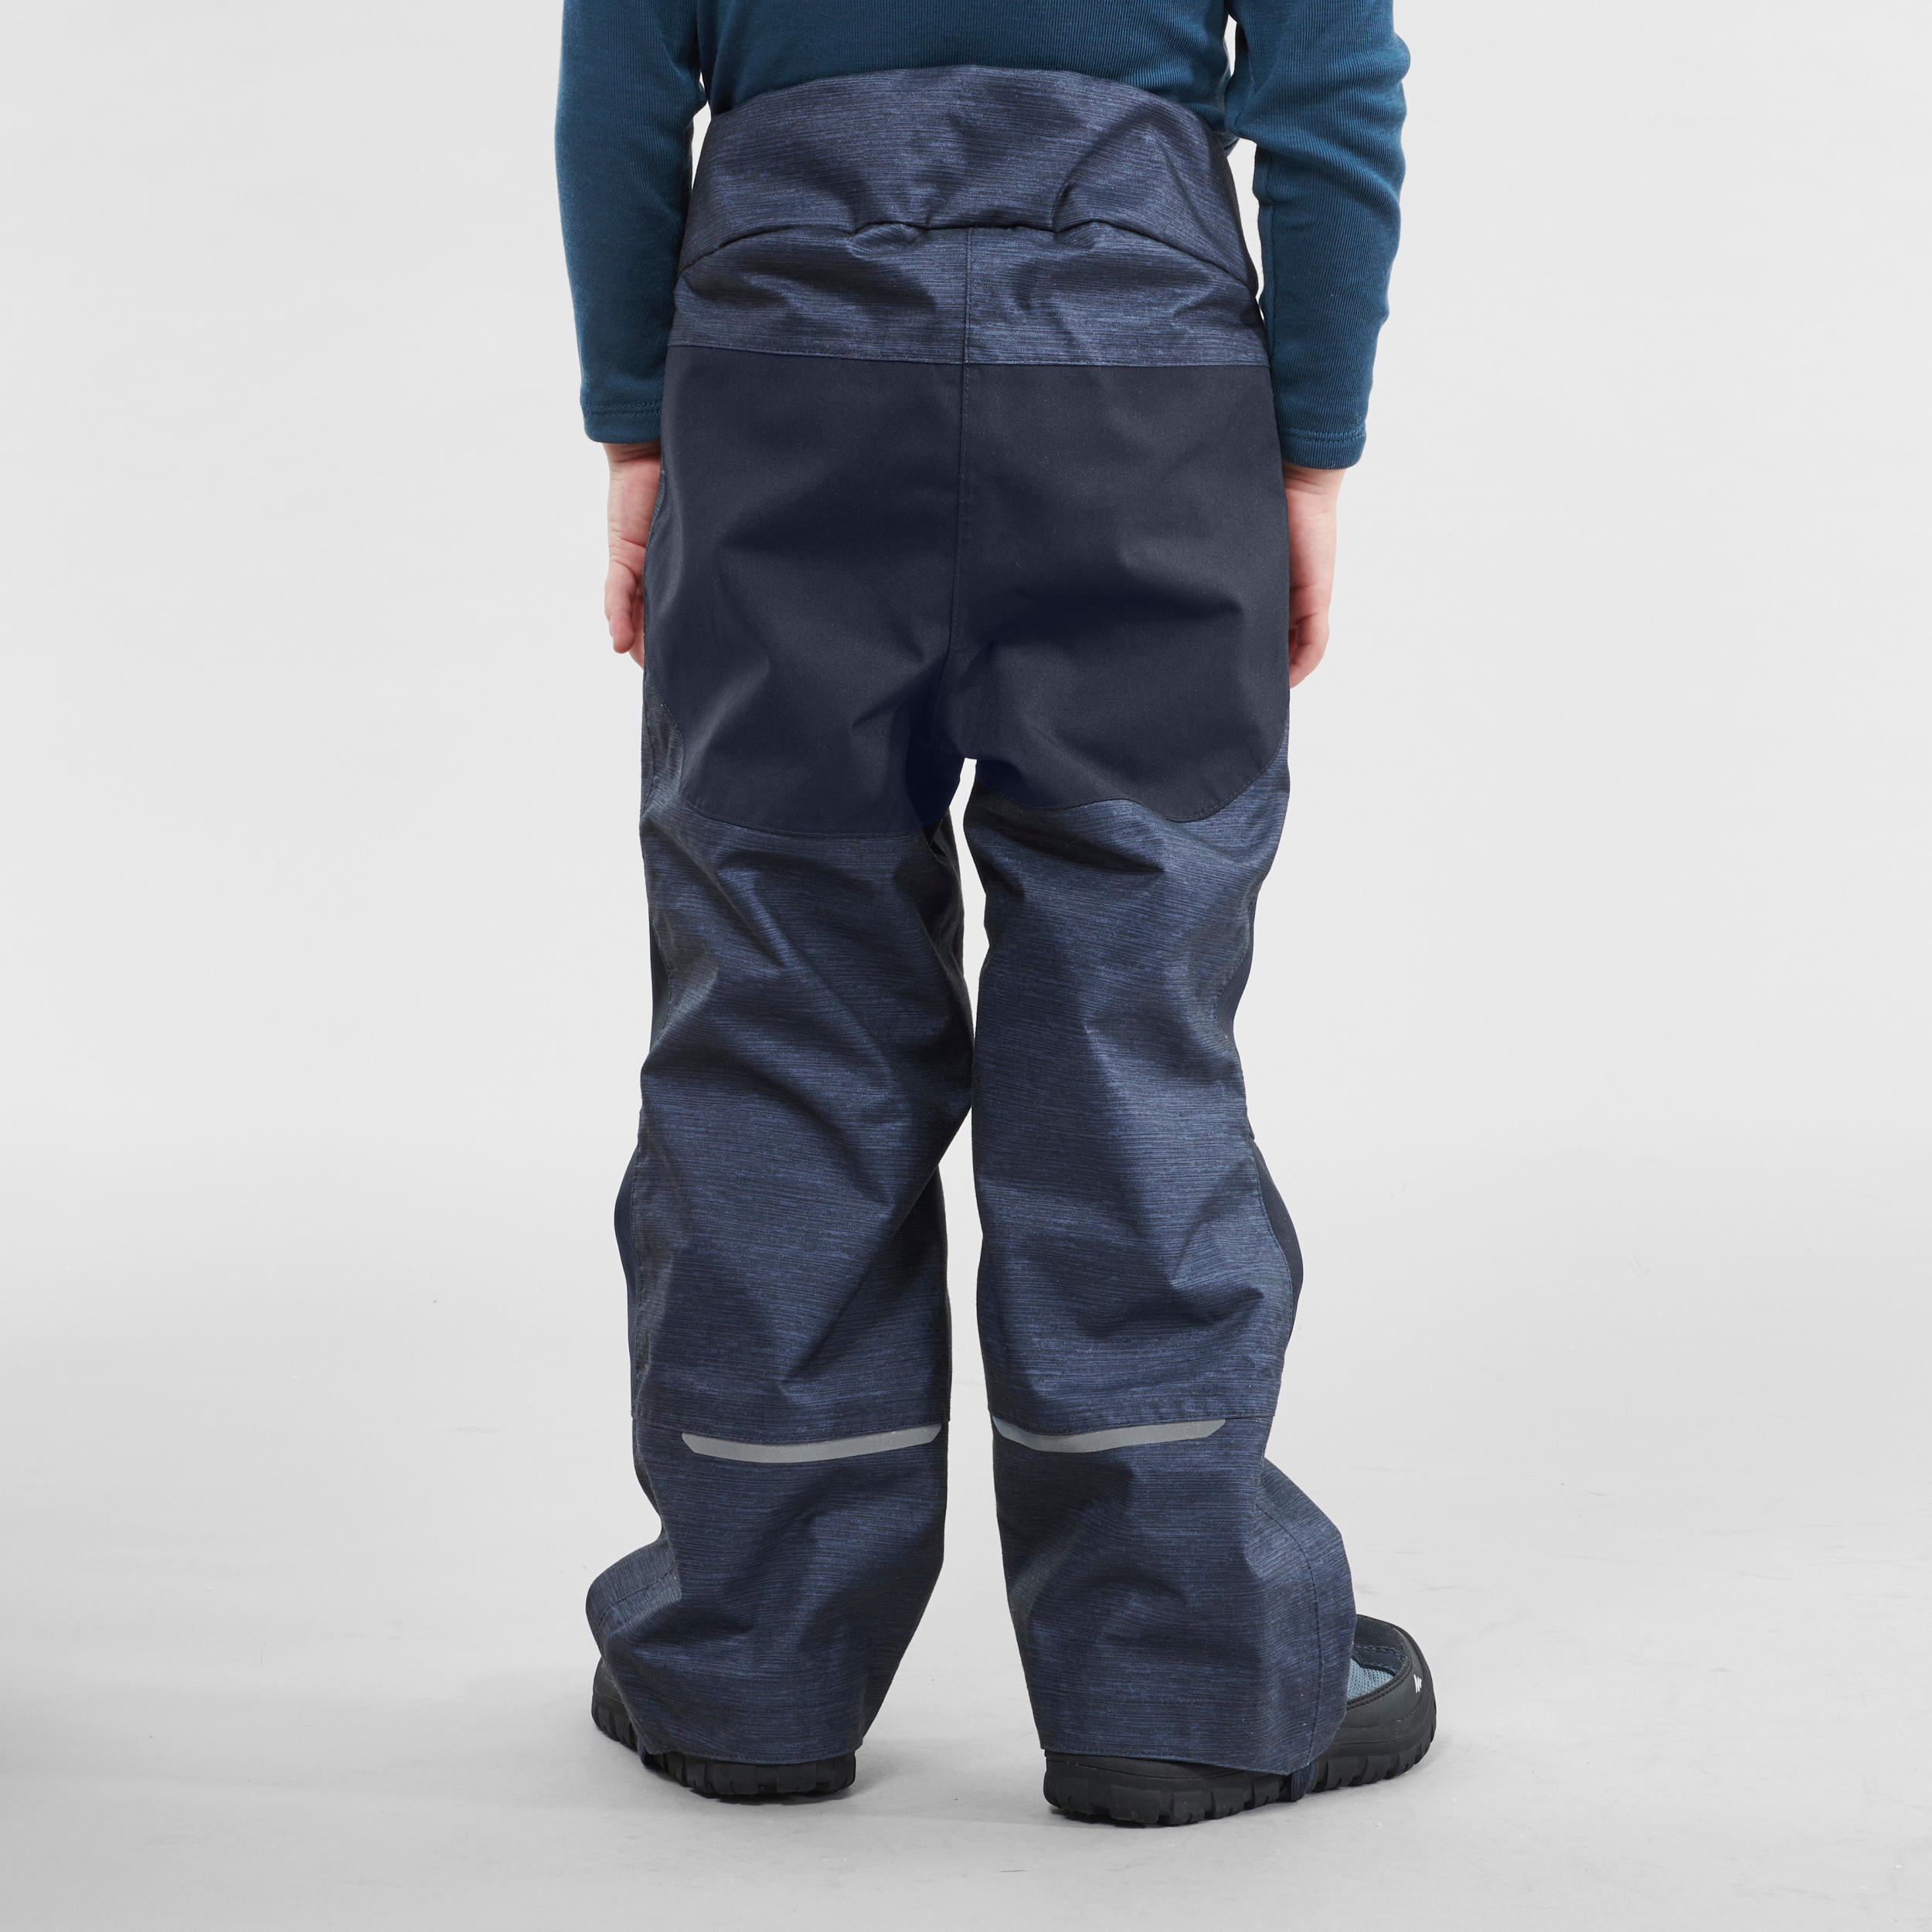 Kids' 2-6 Years Snow Hiking Warm and Waterproof Trousers SH500 U-Warm 5/11